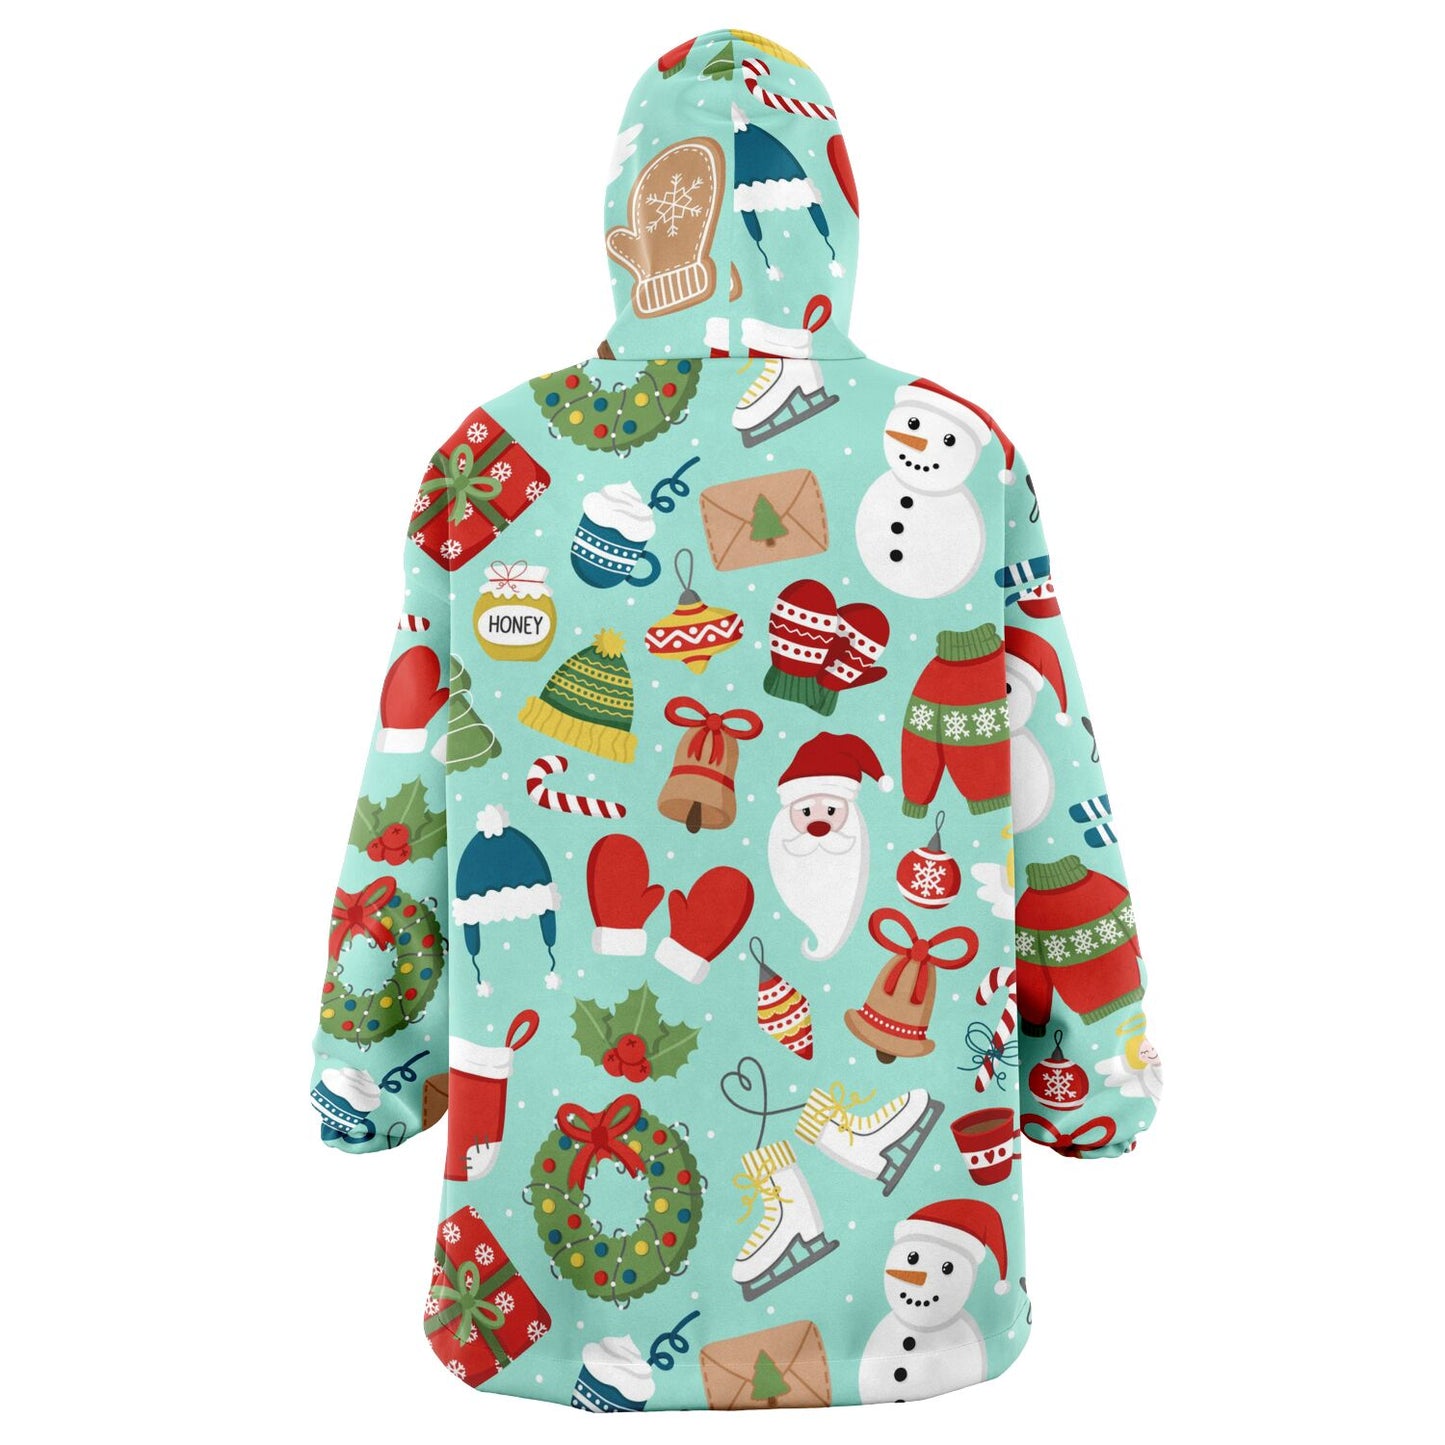 Christmas snug hoodie blanket for holiday seanson